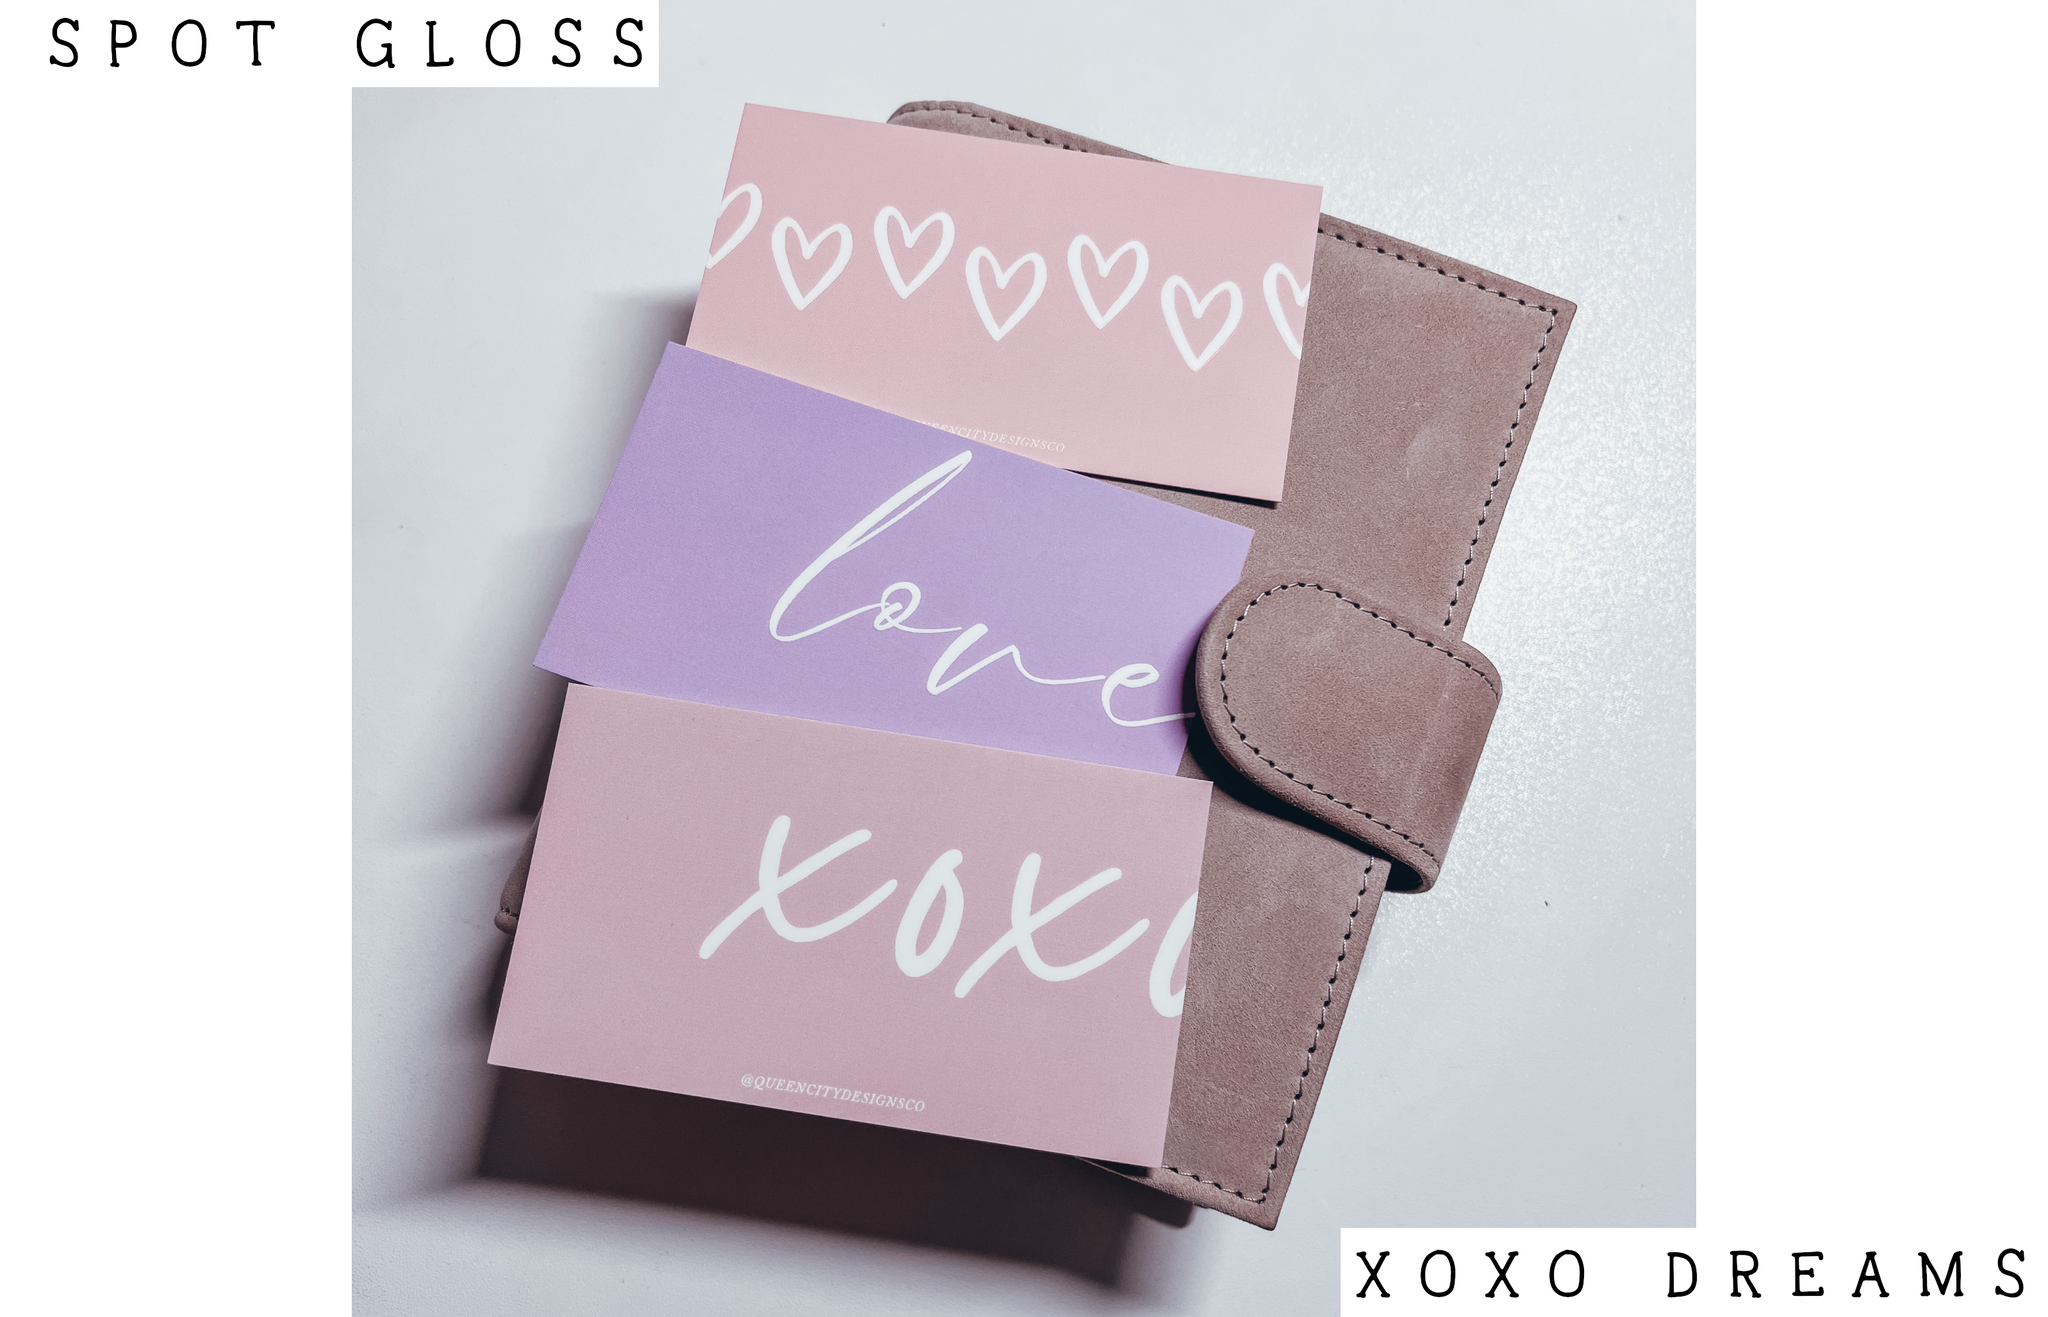 [SET OF 3] XOXO Dreams Spot Gloss Journaling Card Set - Business Card Size